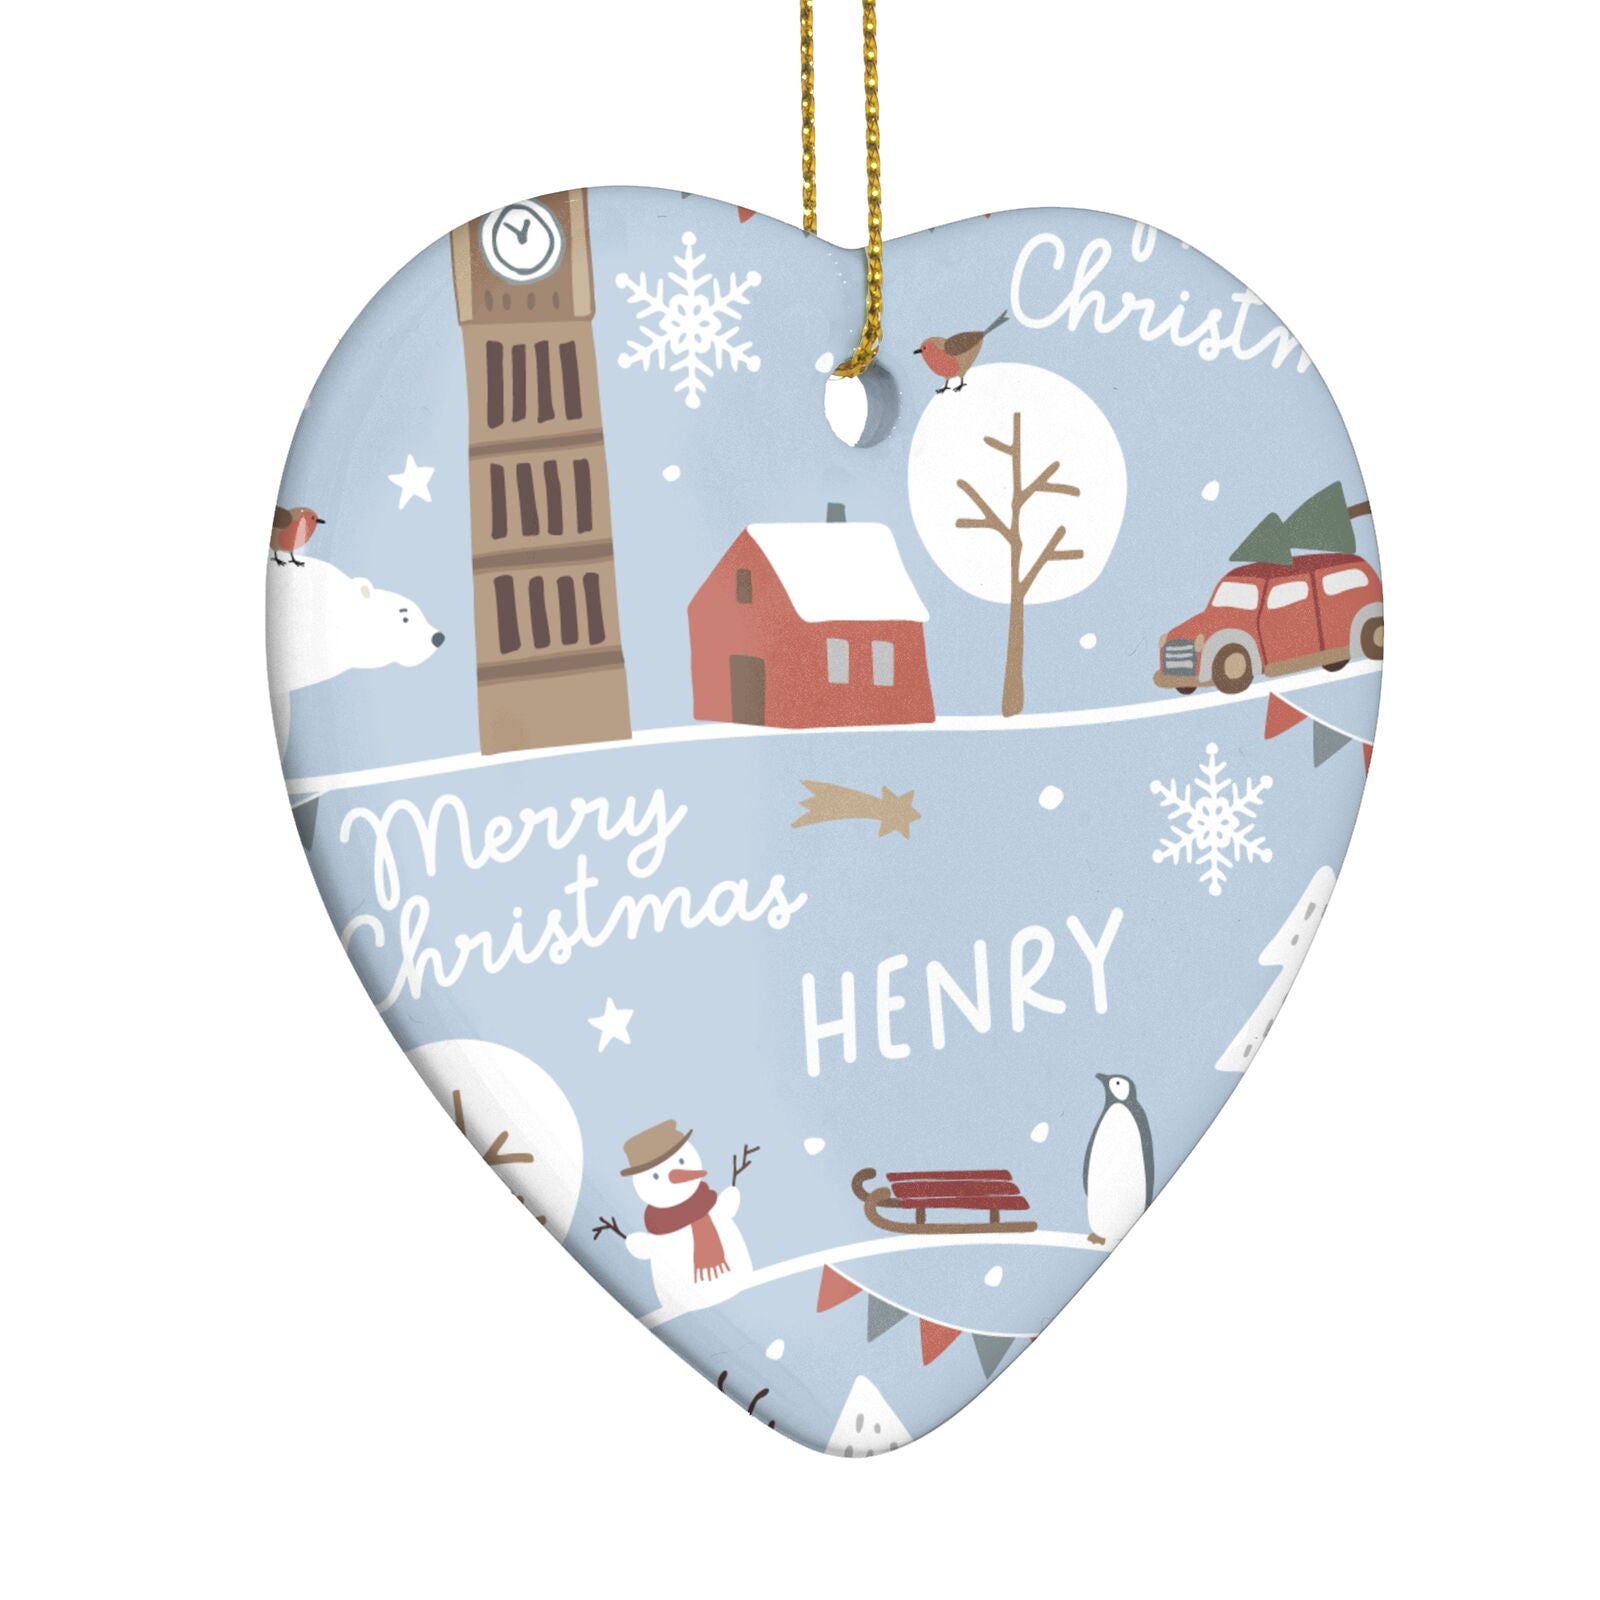 London Christmas Scene Personalised Heart Decoration Side Angle